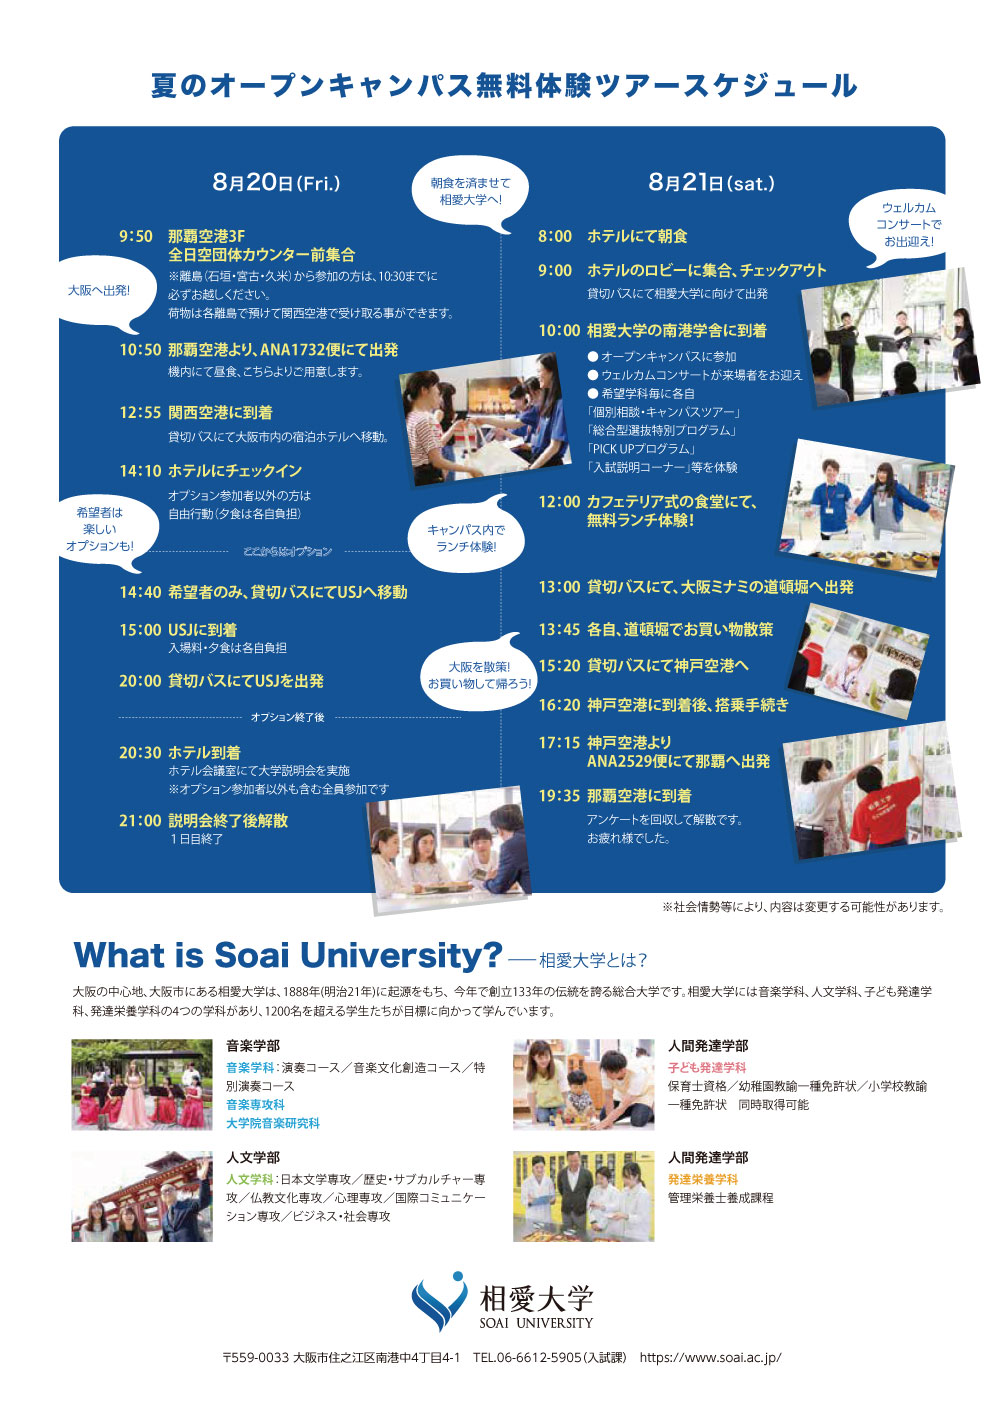 https://www.soai.ac.jp/information/news/okinawa_campus_03.jpg